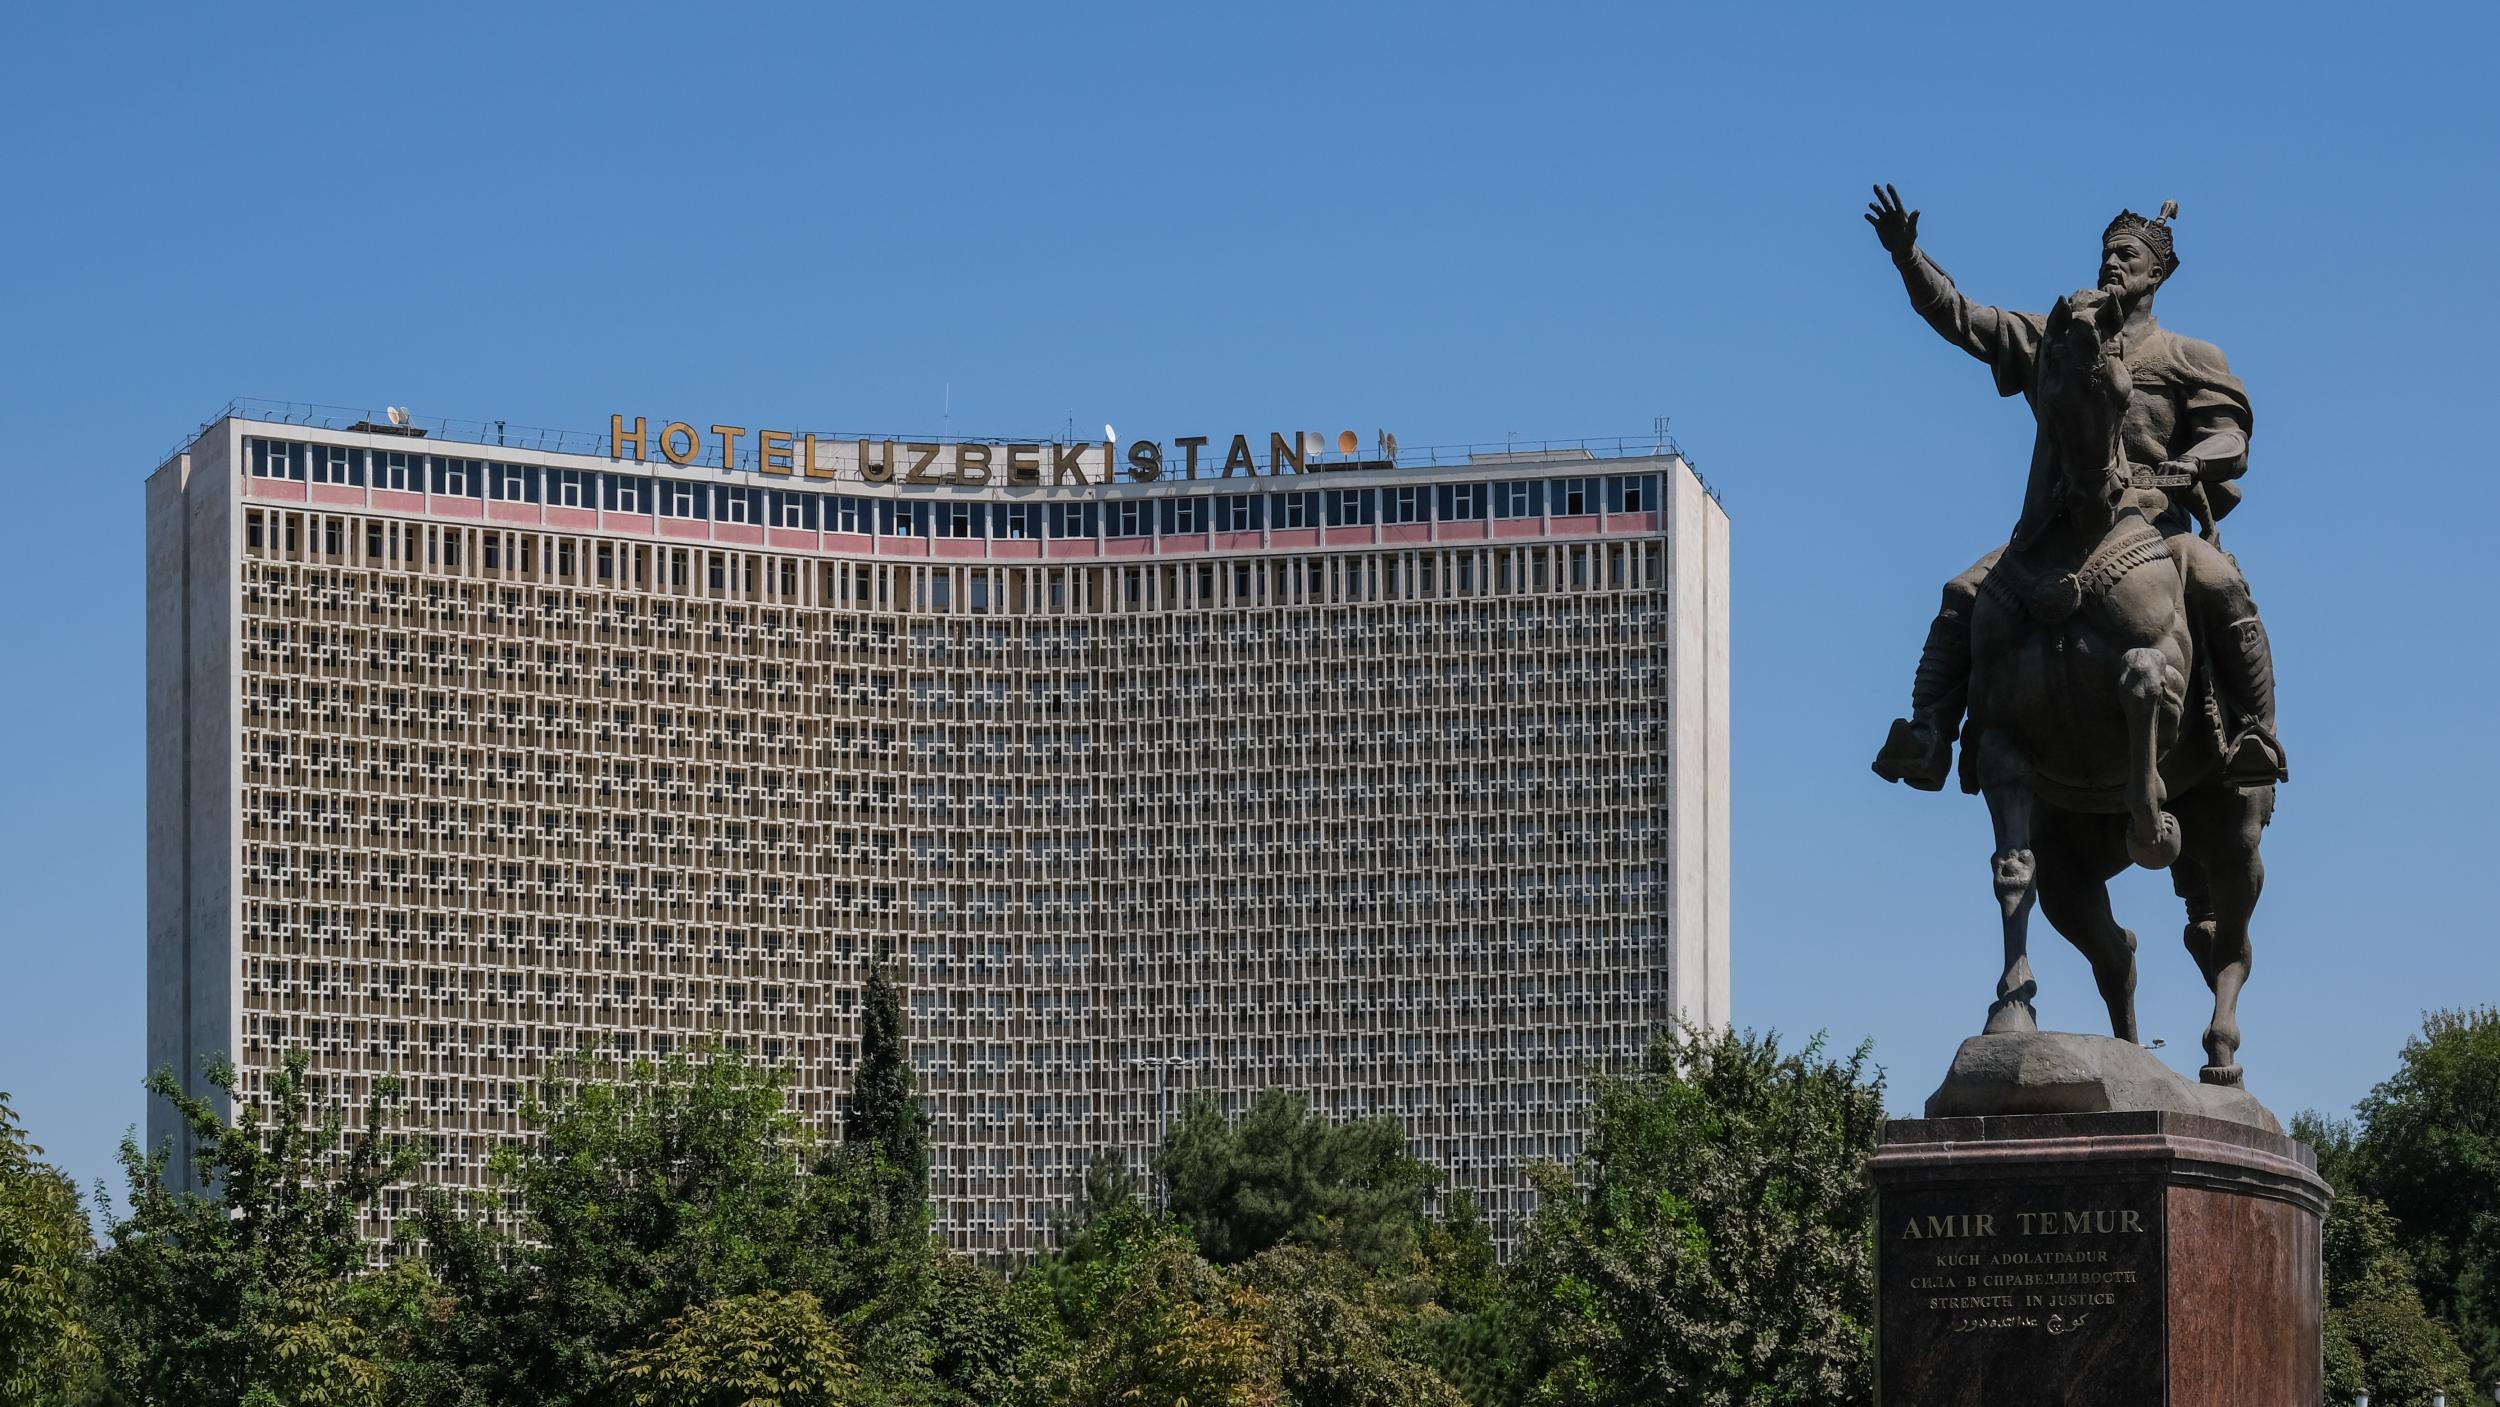 The monstrous Hotel Uzbekistan